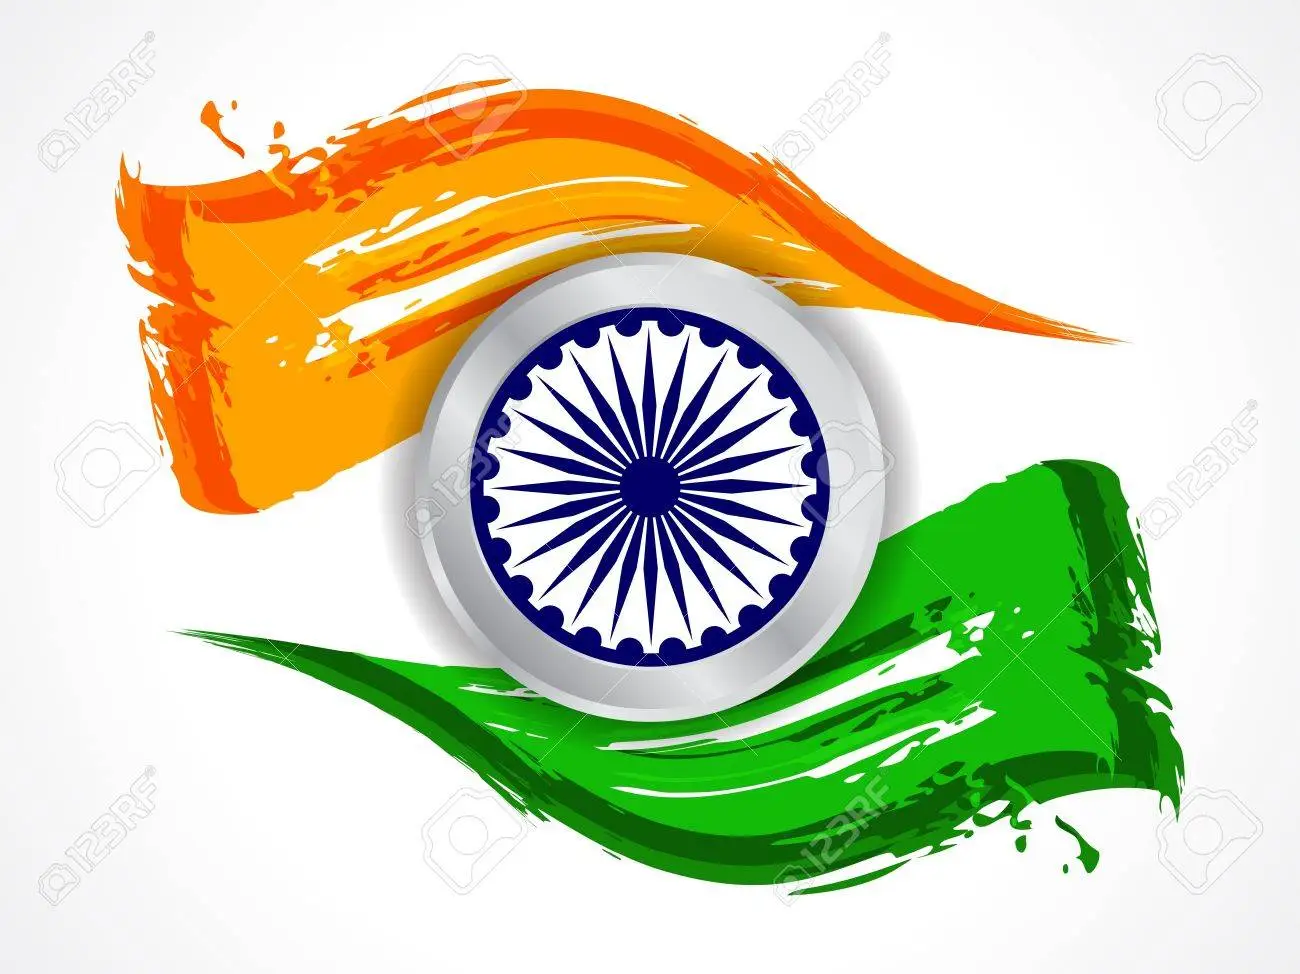 slogan on national flag of india in hindi